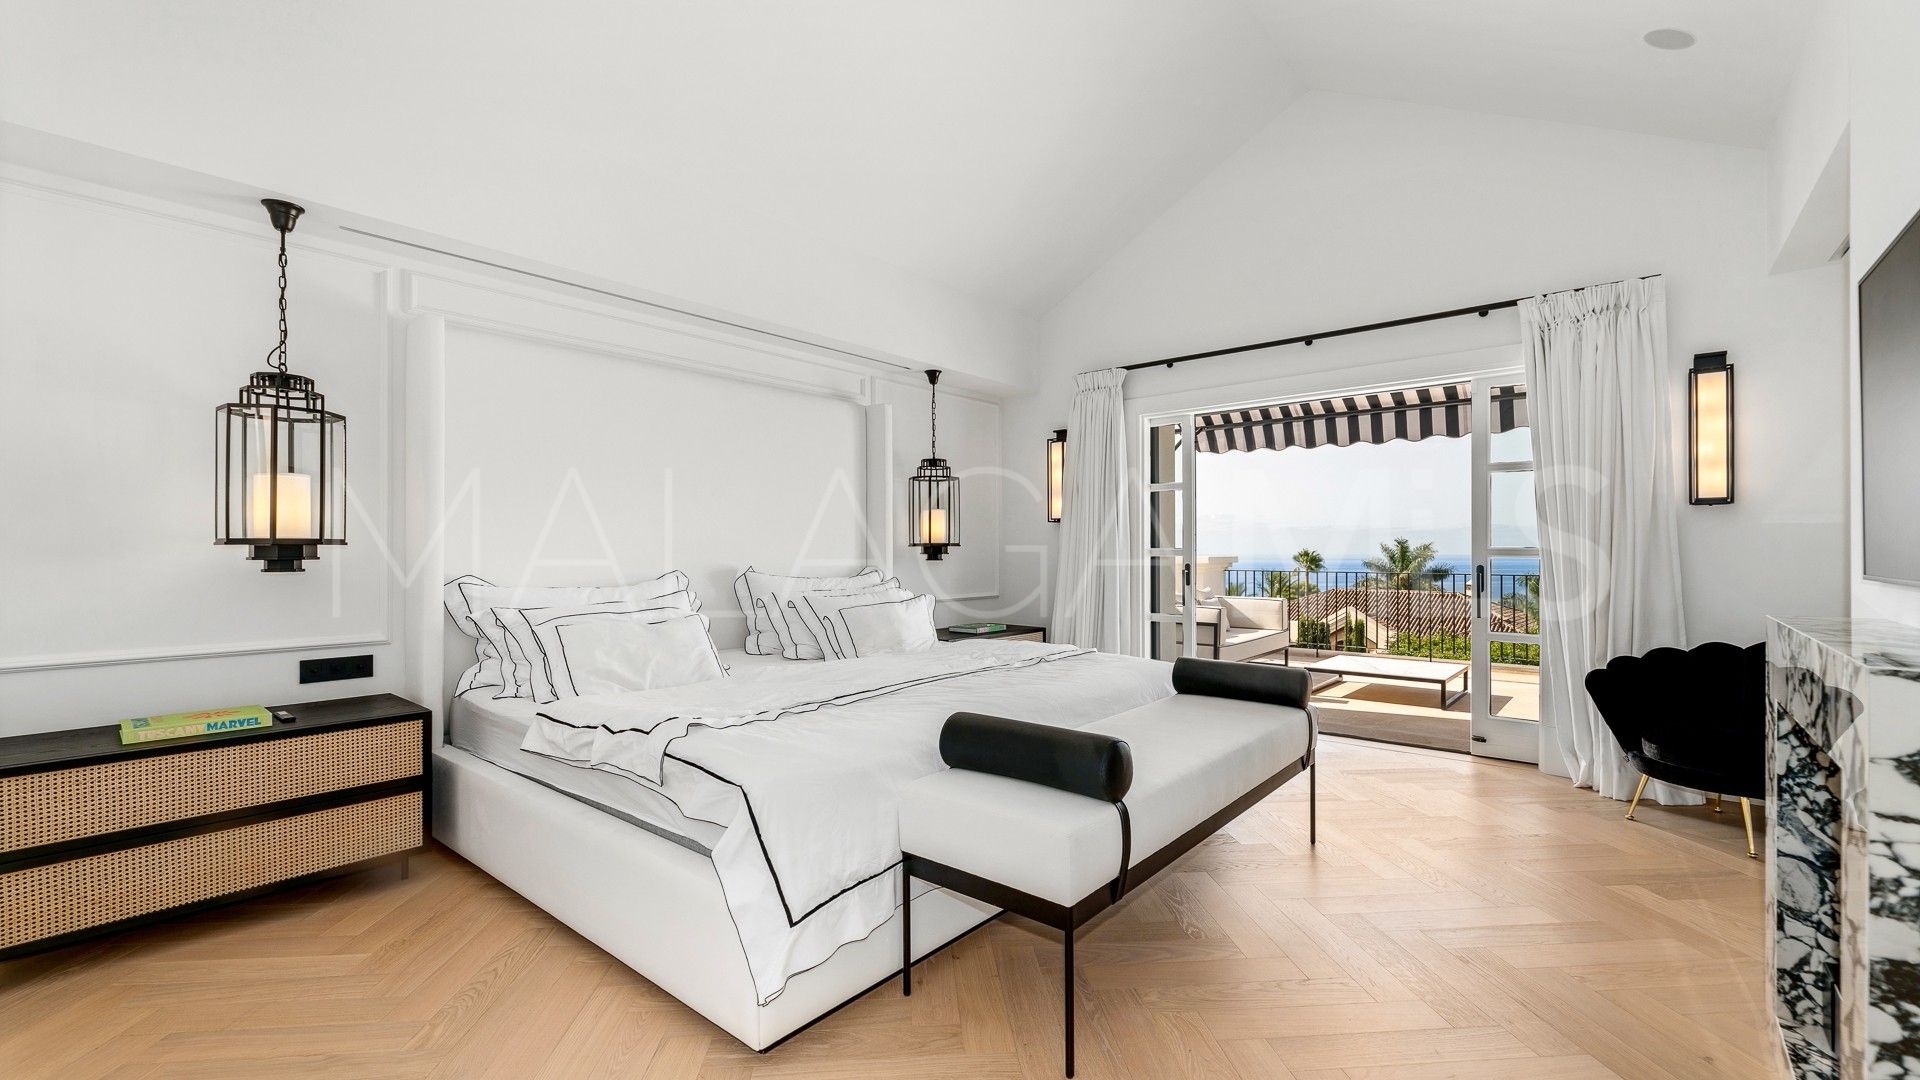 5 bedrooms Sierra Blanca villa for sale